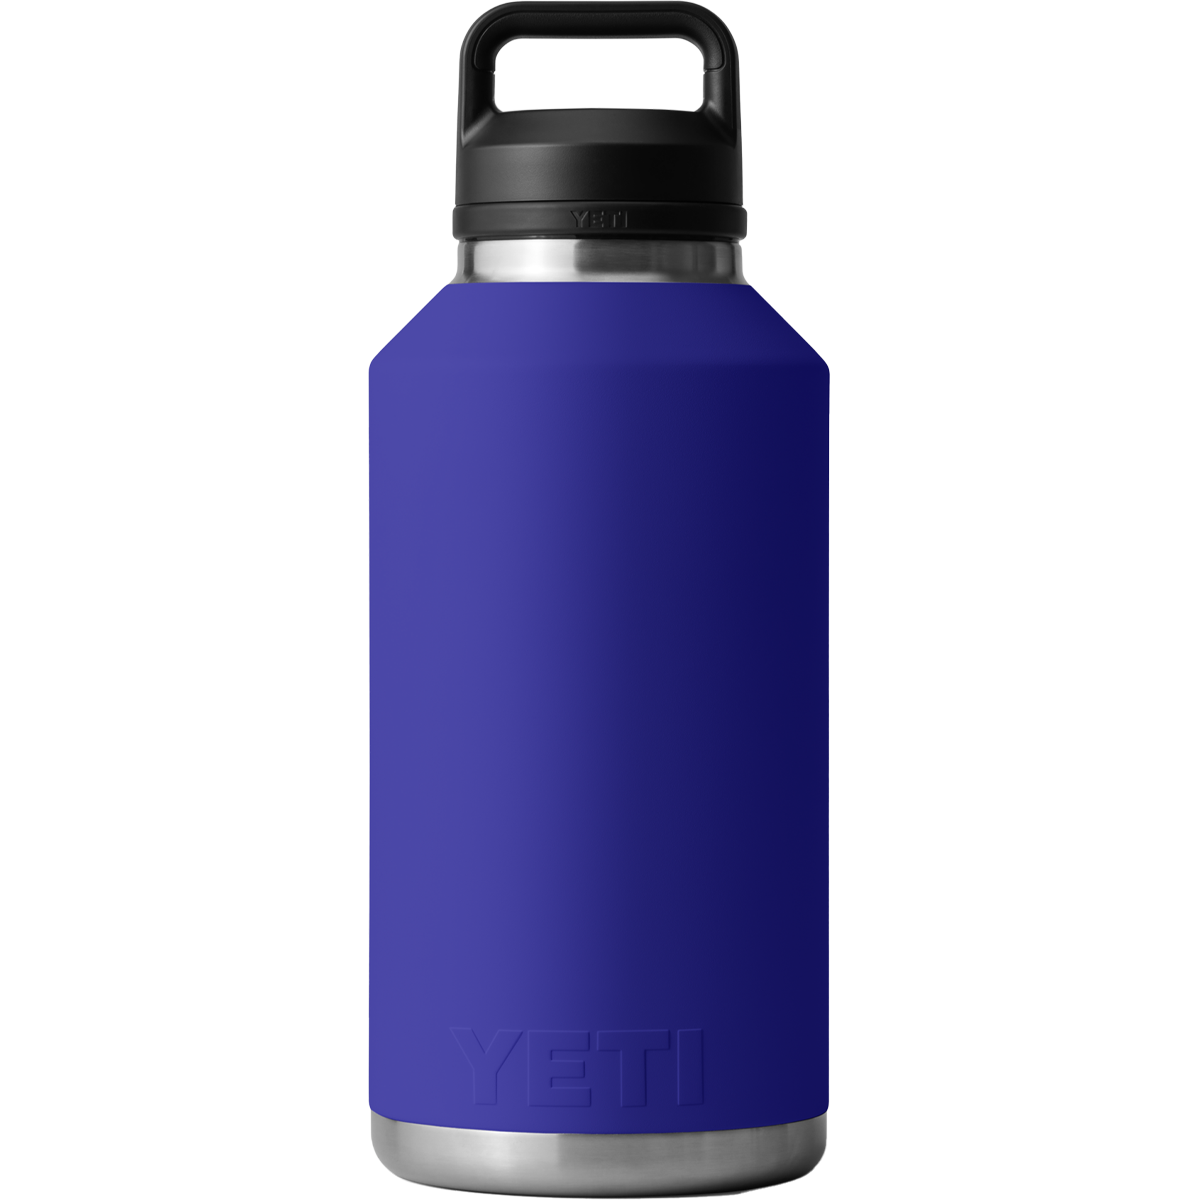 Yeti one gallon jug compared to half gallon jug and 64 oz Rambler bottle 